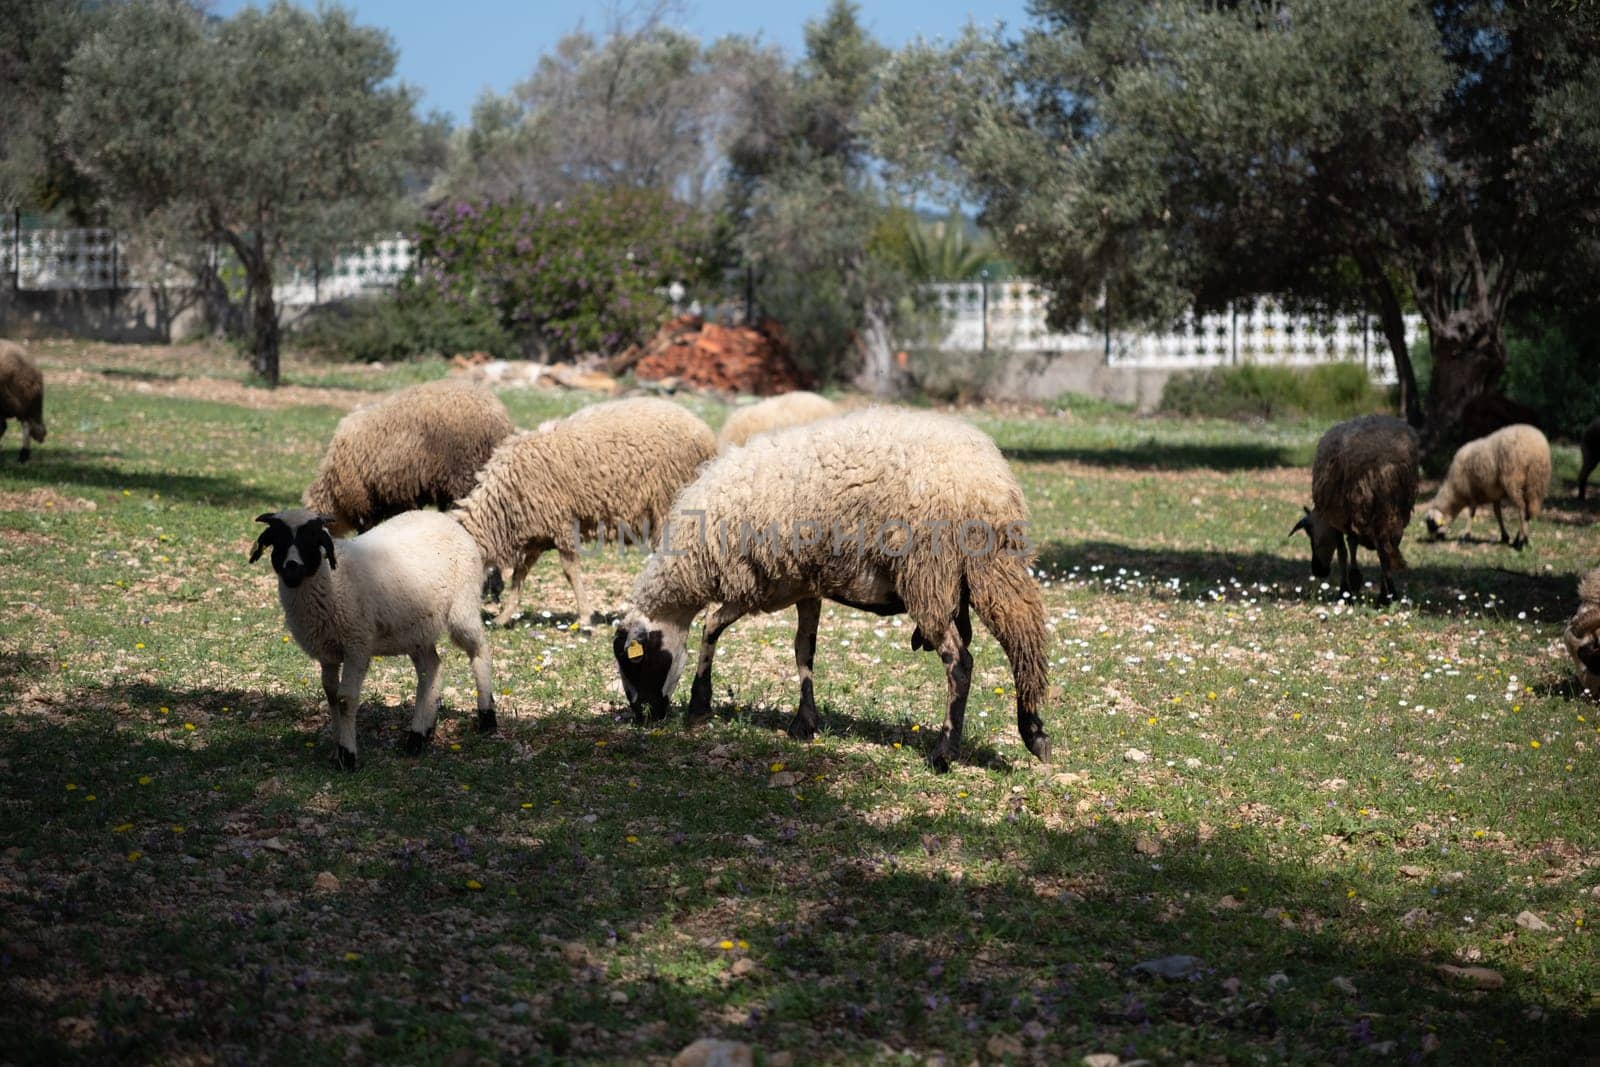 sheep grazing in the green field by senkaya